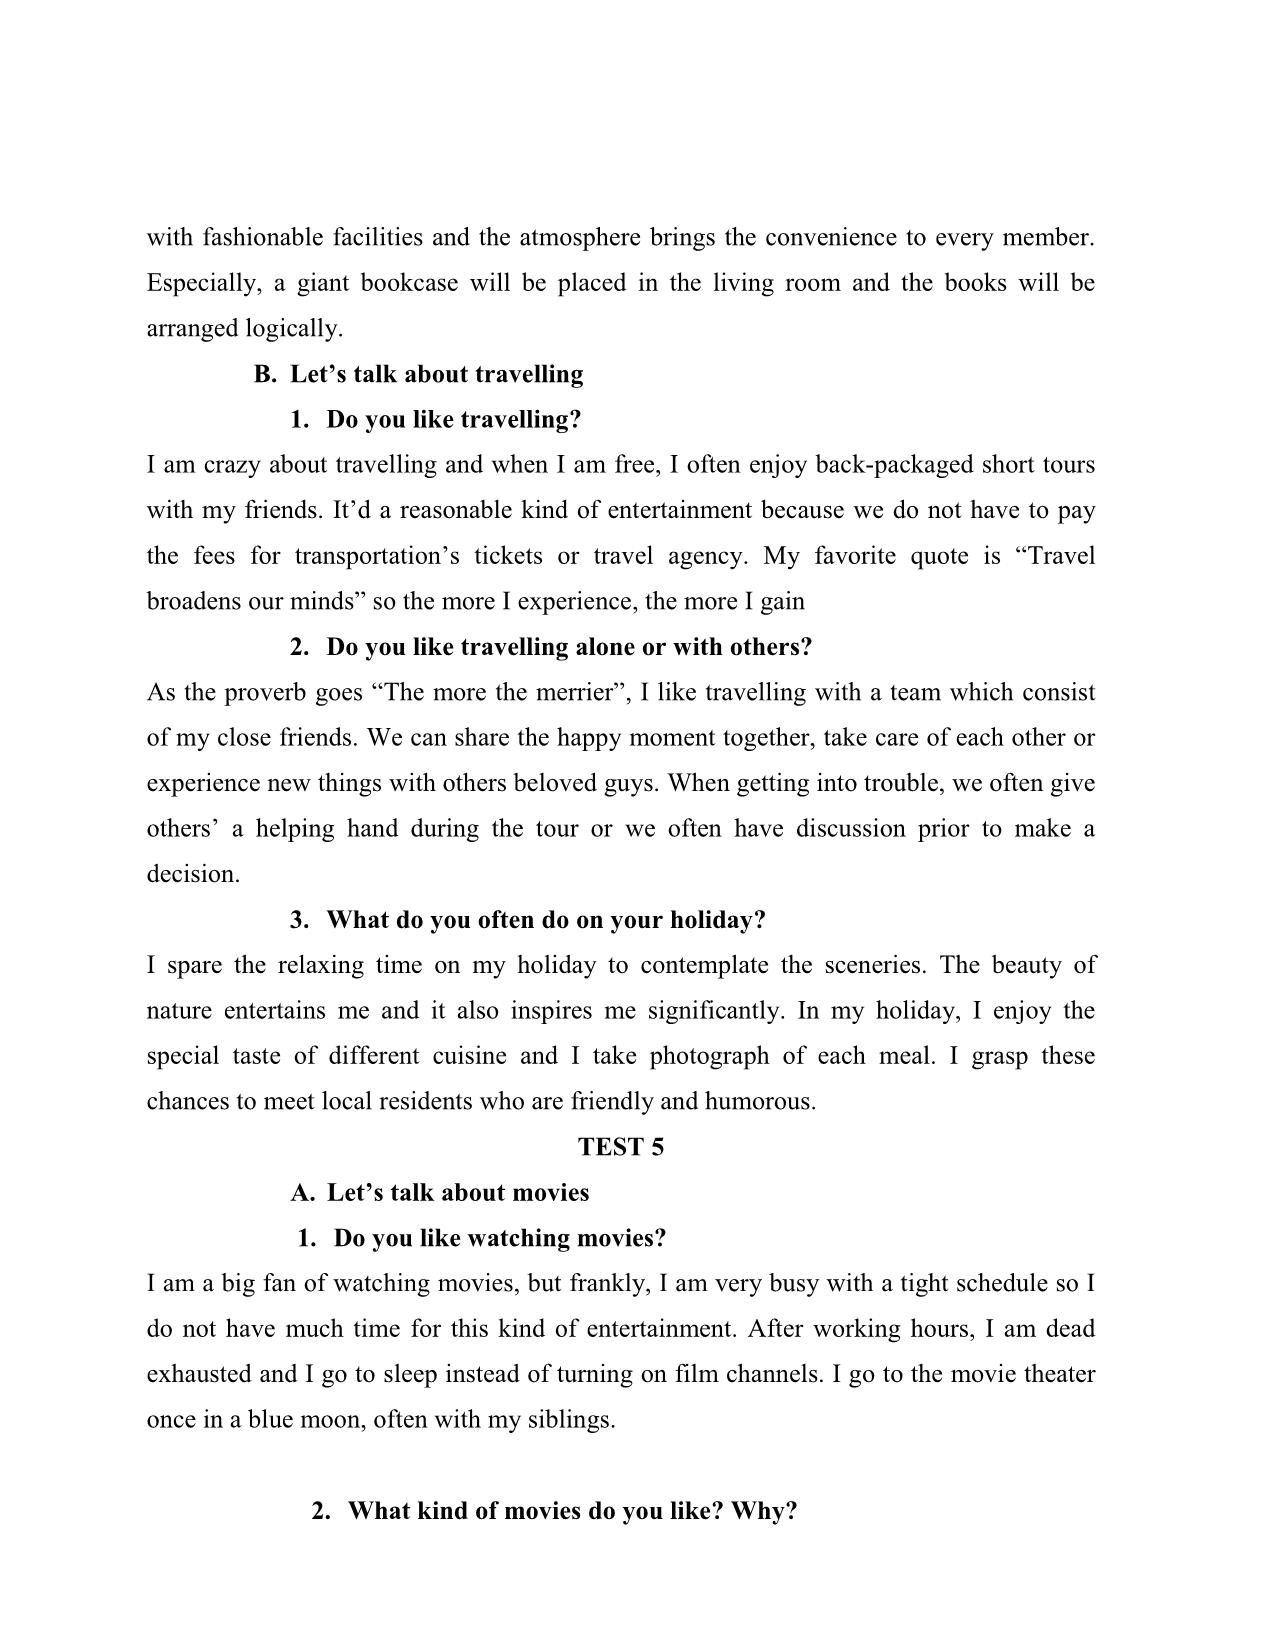 Tiếng Anh - Vstep speaking part 1 trang 6